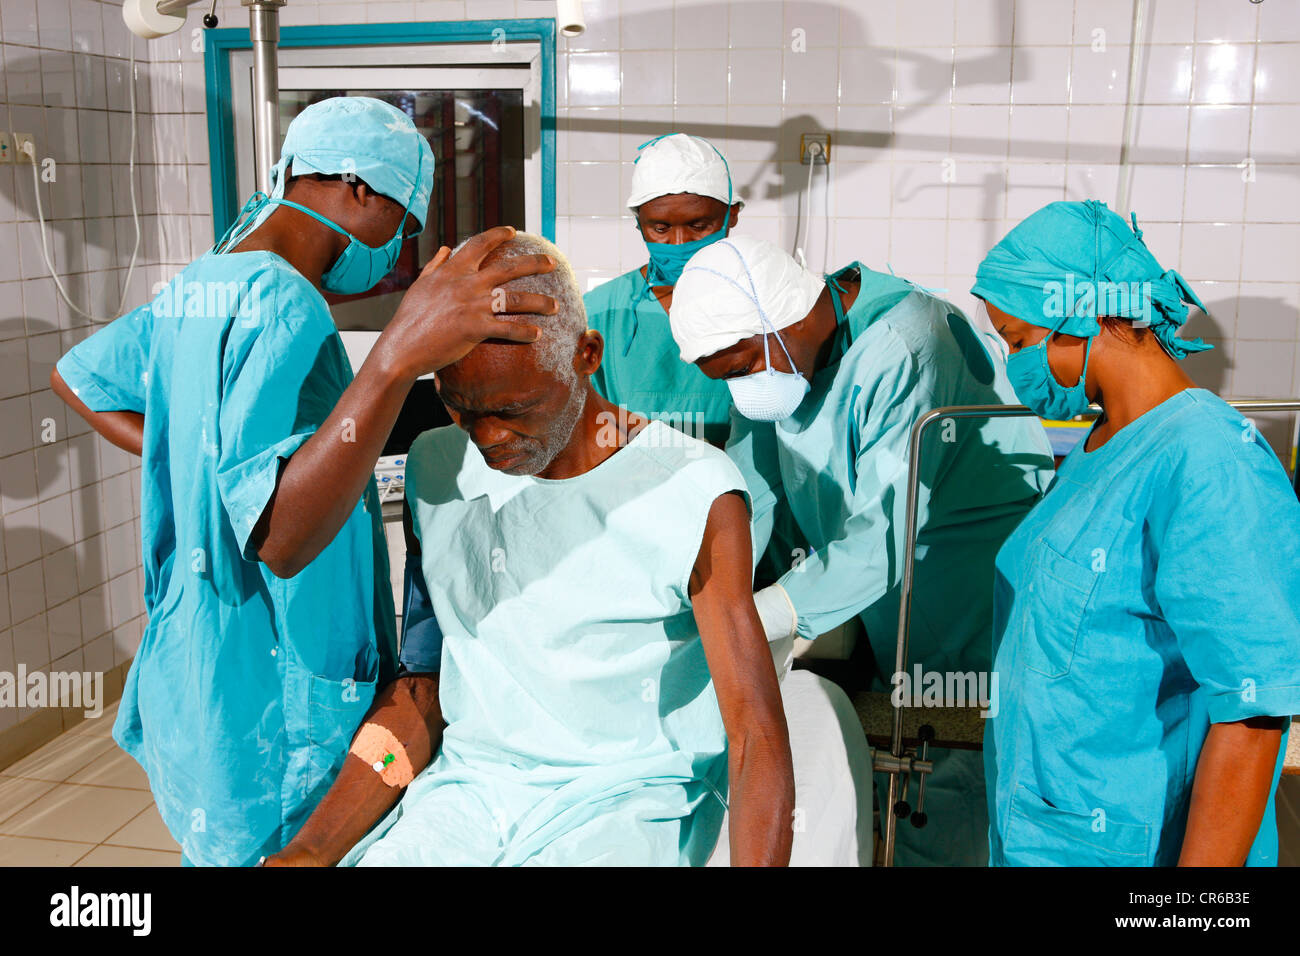 Uomo di essere preparati per la chirurgia, ospedale, Manyemen, Camerun, Africa Foto Stock